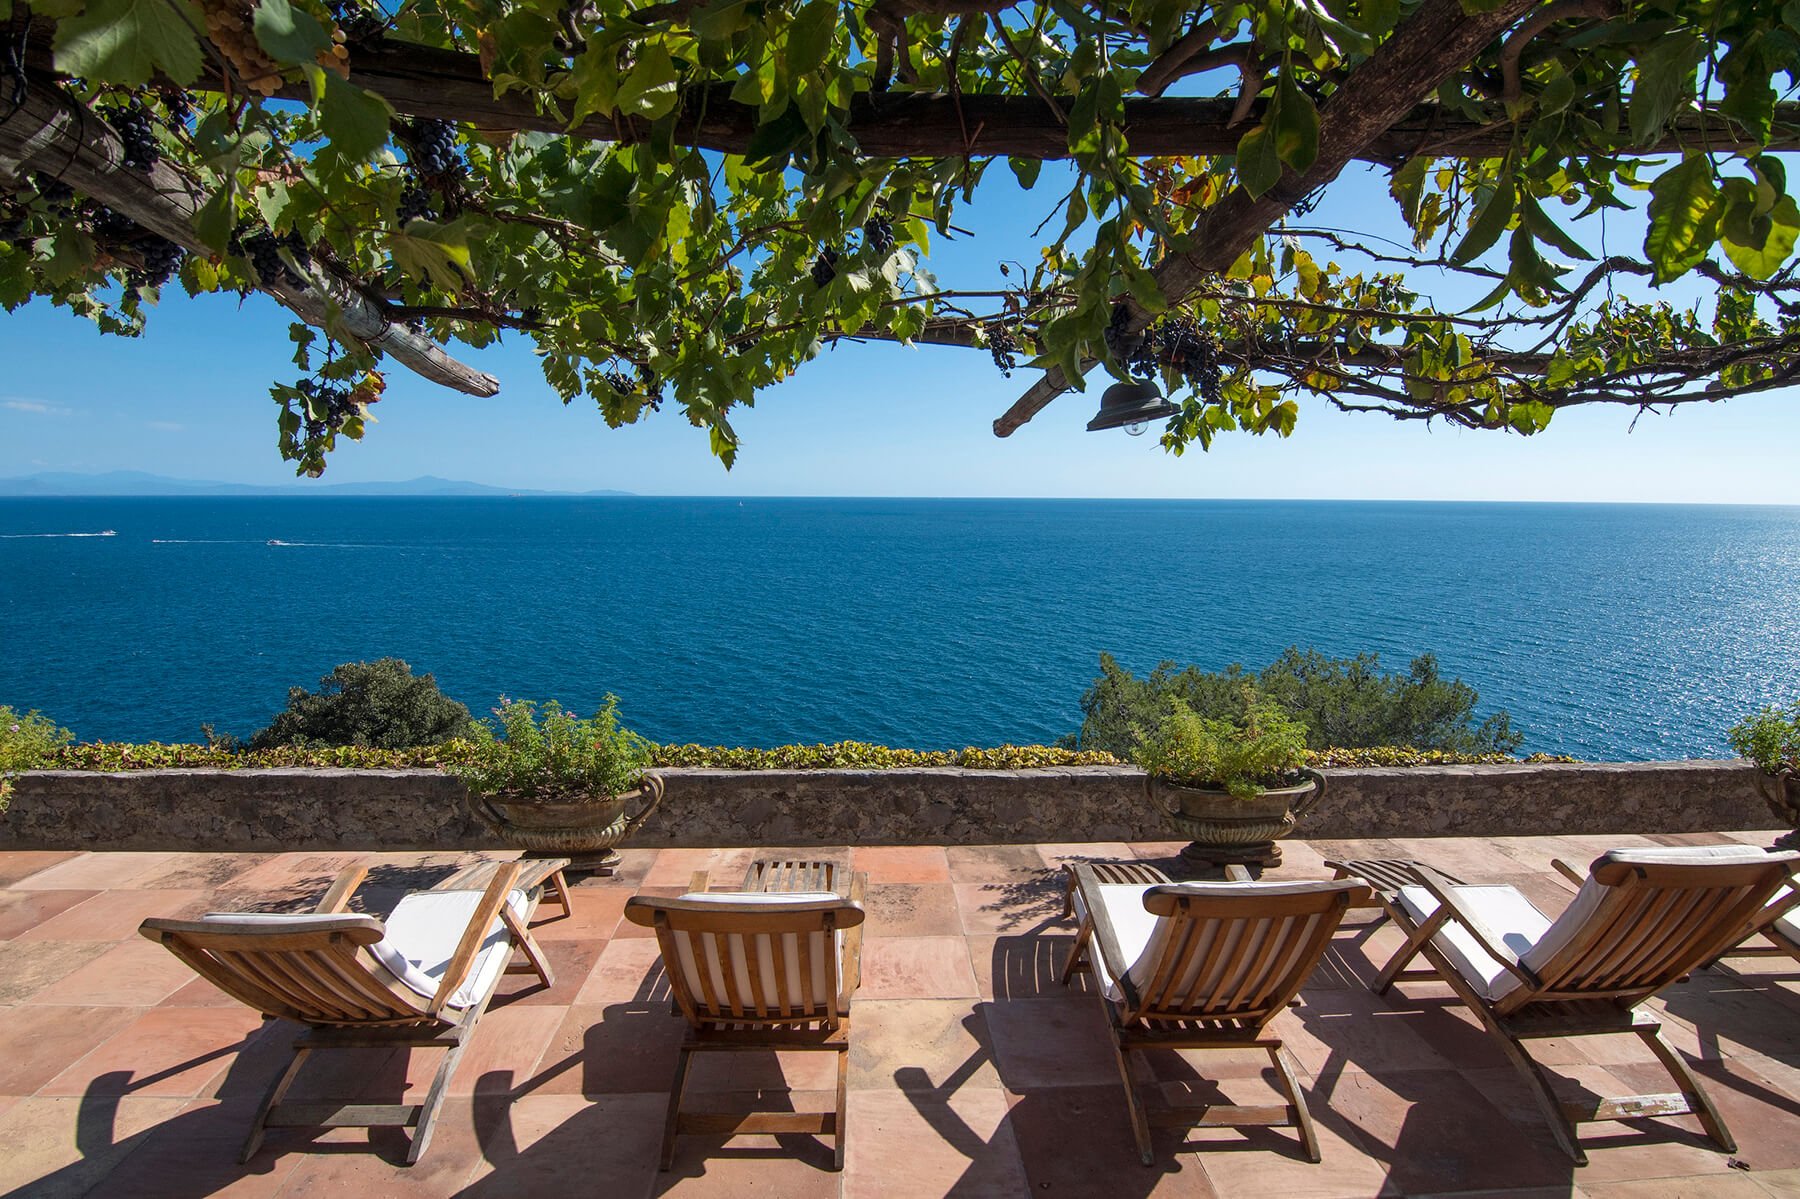 Francis York Fully Catered Luxury Villa Rental on the Amalfi Coast 4.jpg